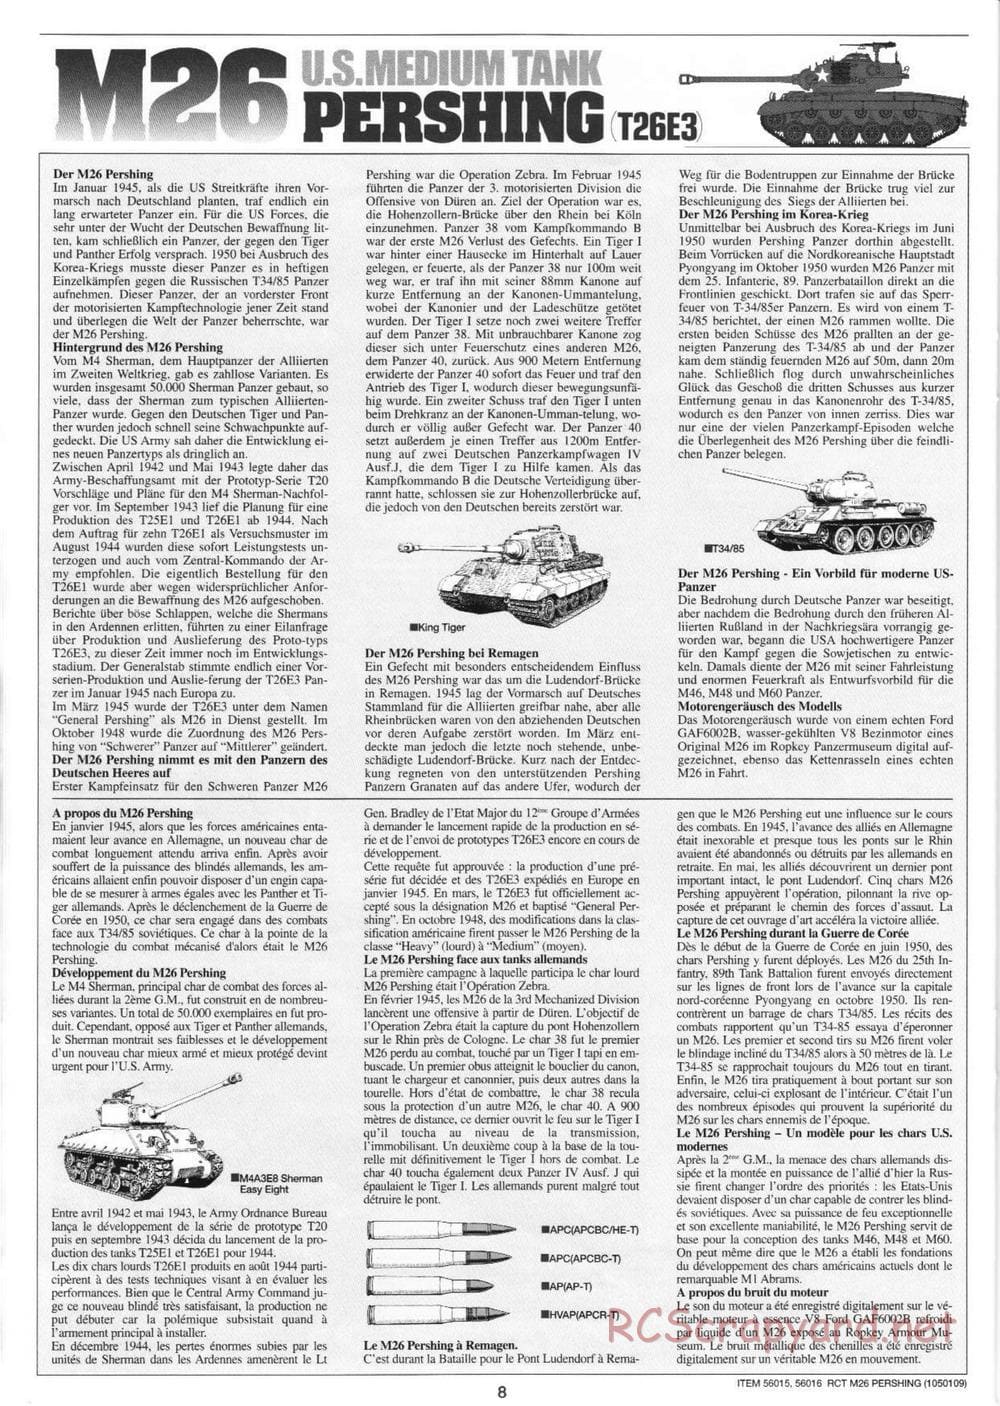 Tamiya - M26 Pershing - 1/16 Scale Chassis - Manual - Page 8